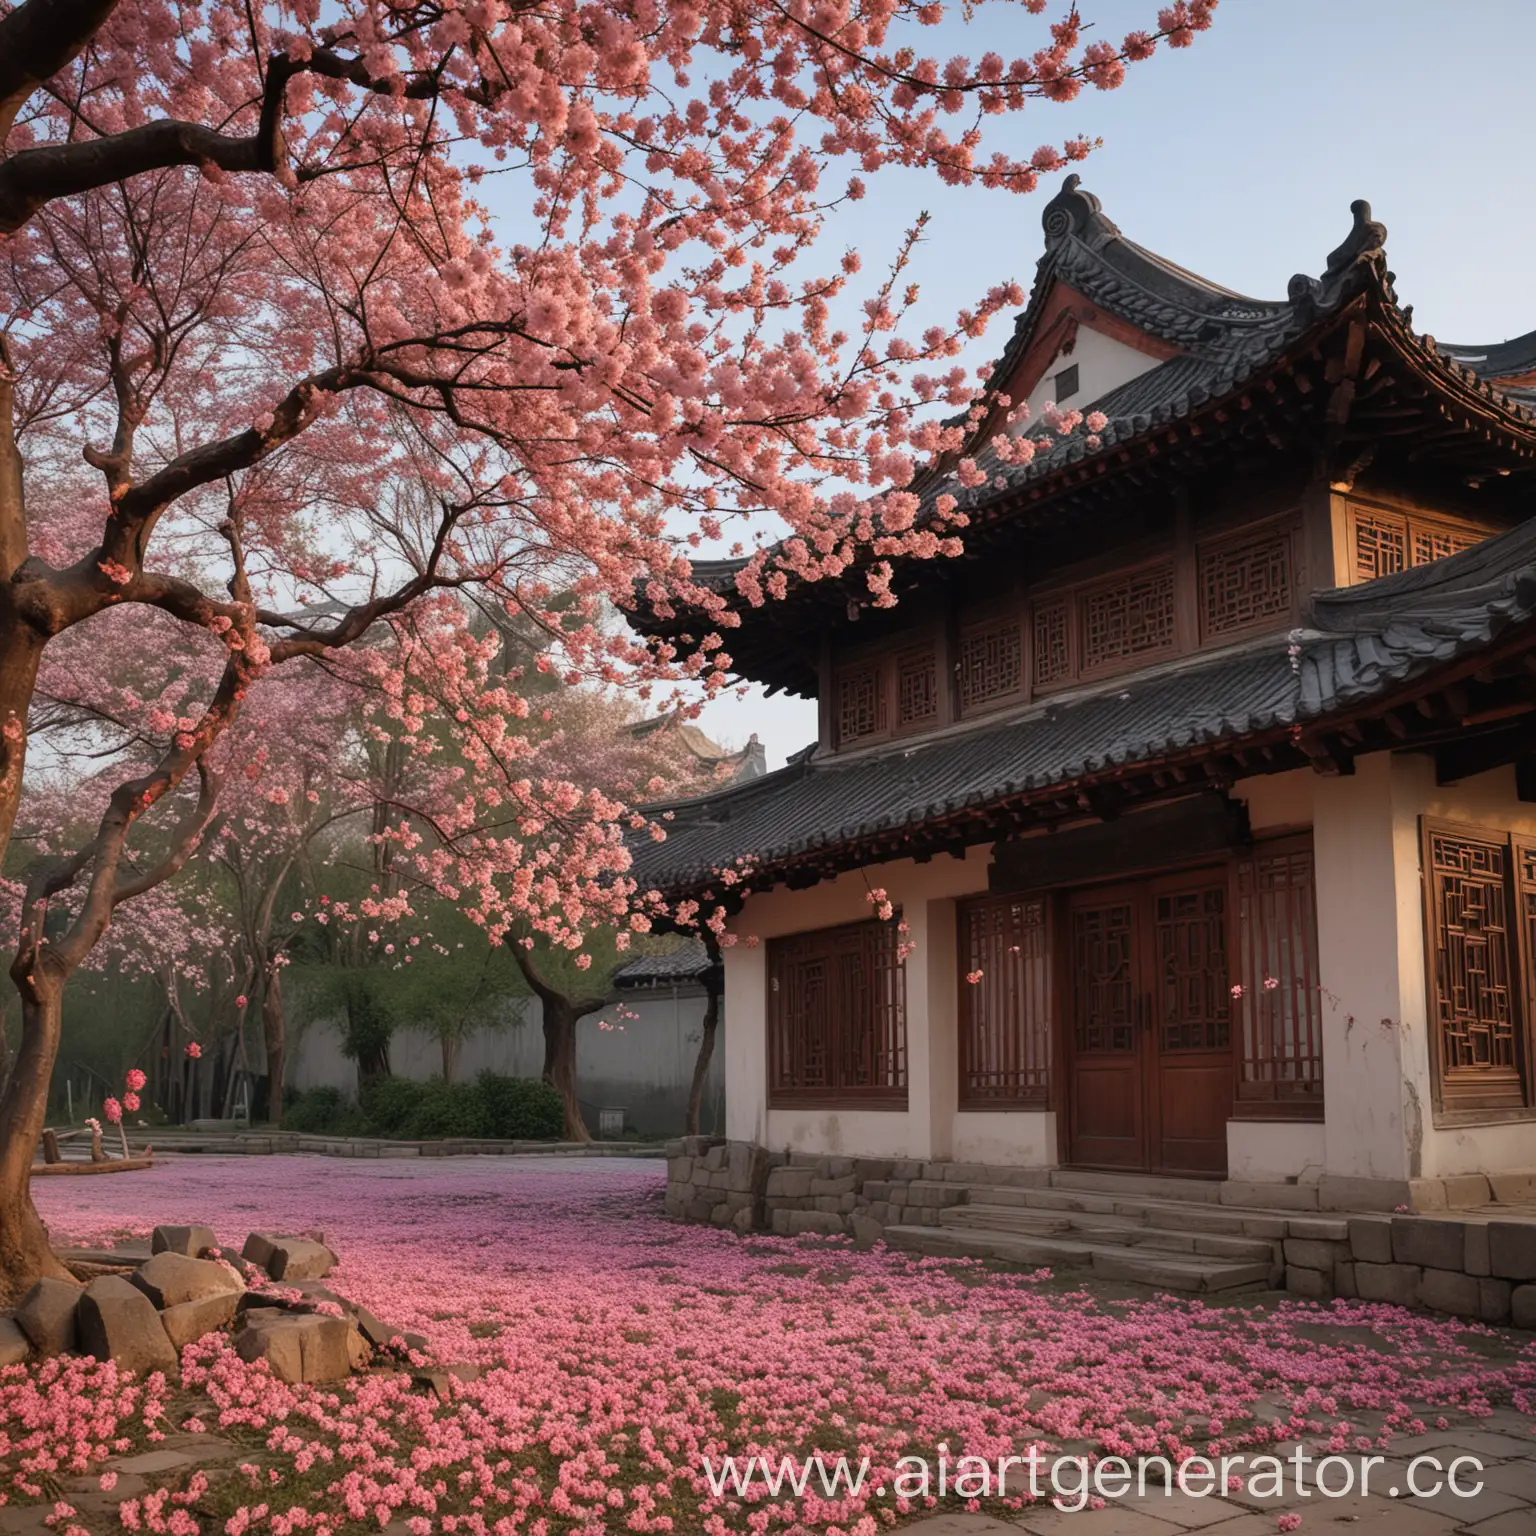 Fuze-in-China-Blooming-Sakura-Near-Traditional-Chinese-House